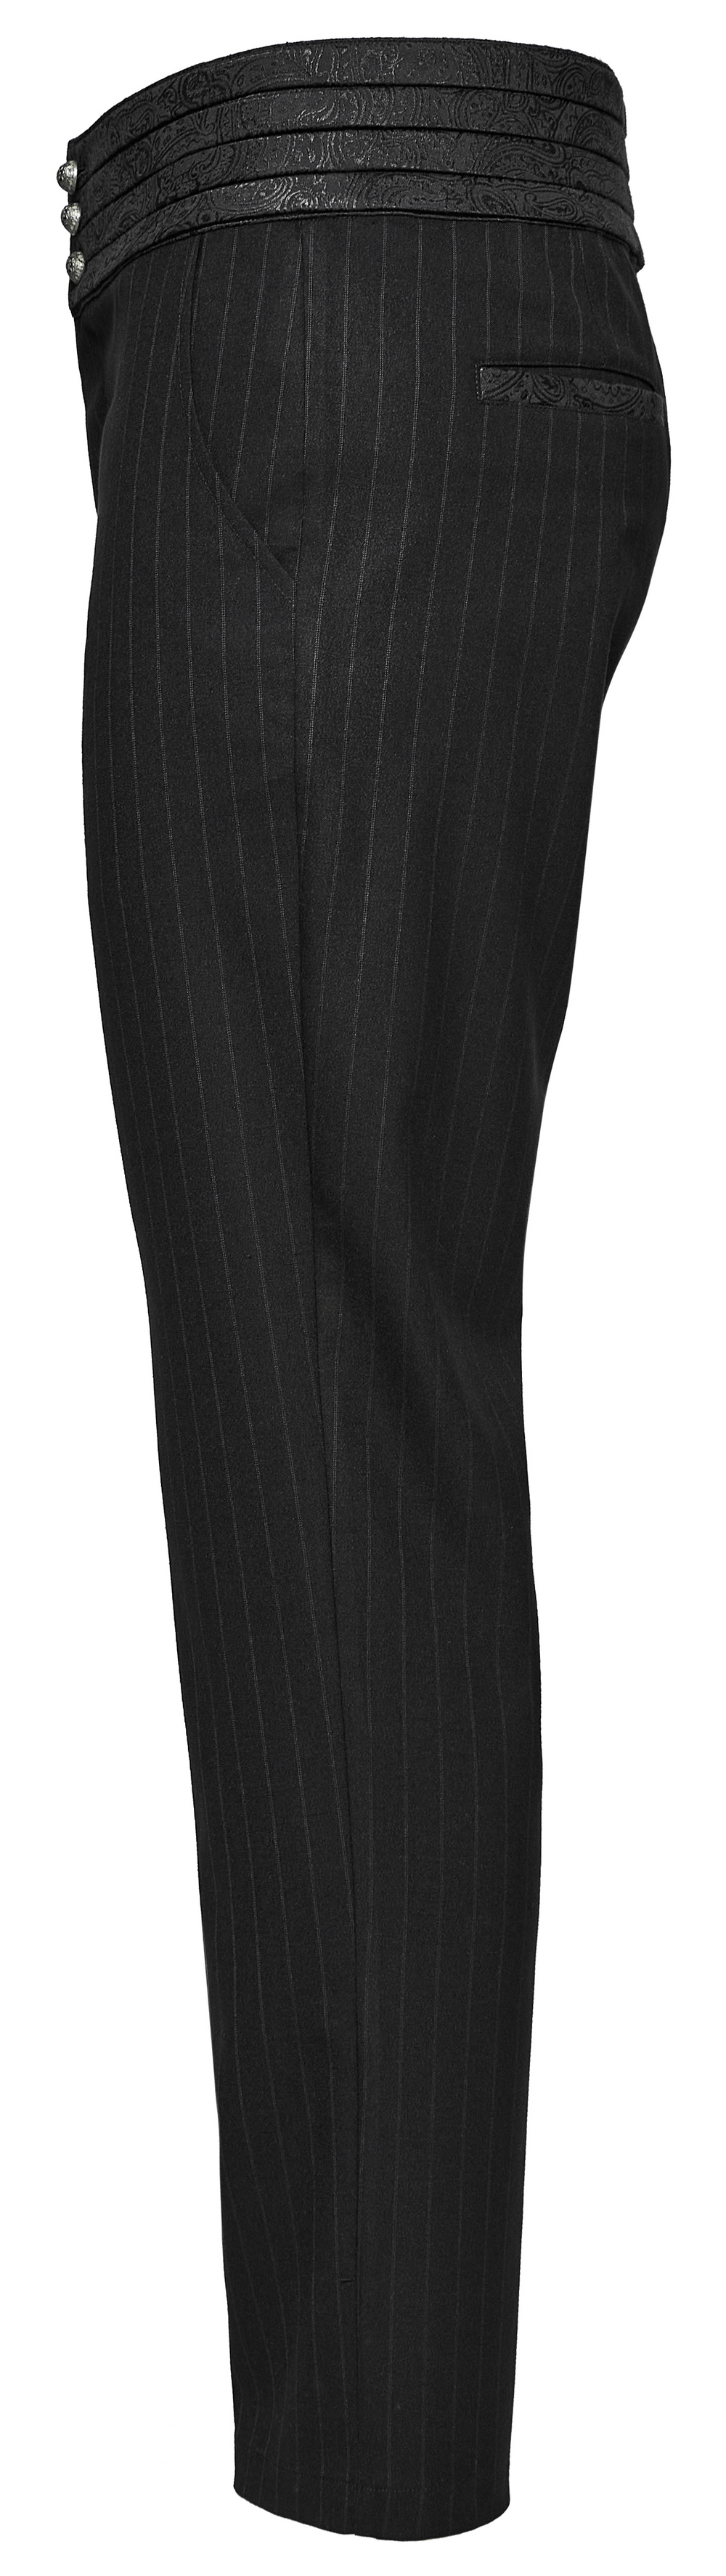 Gentleman Black Striped Pants with Elegant Belt